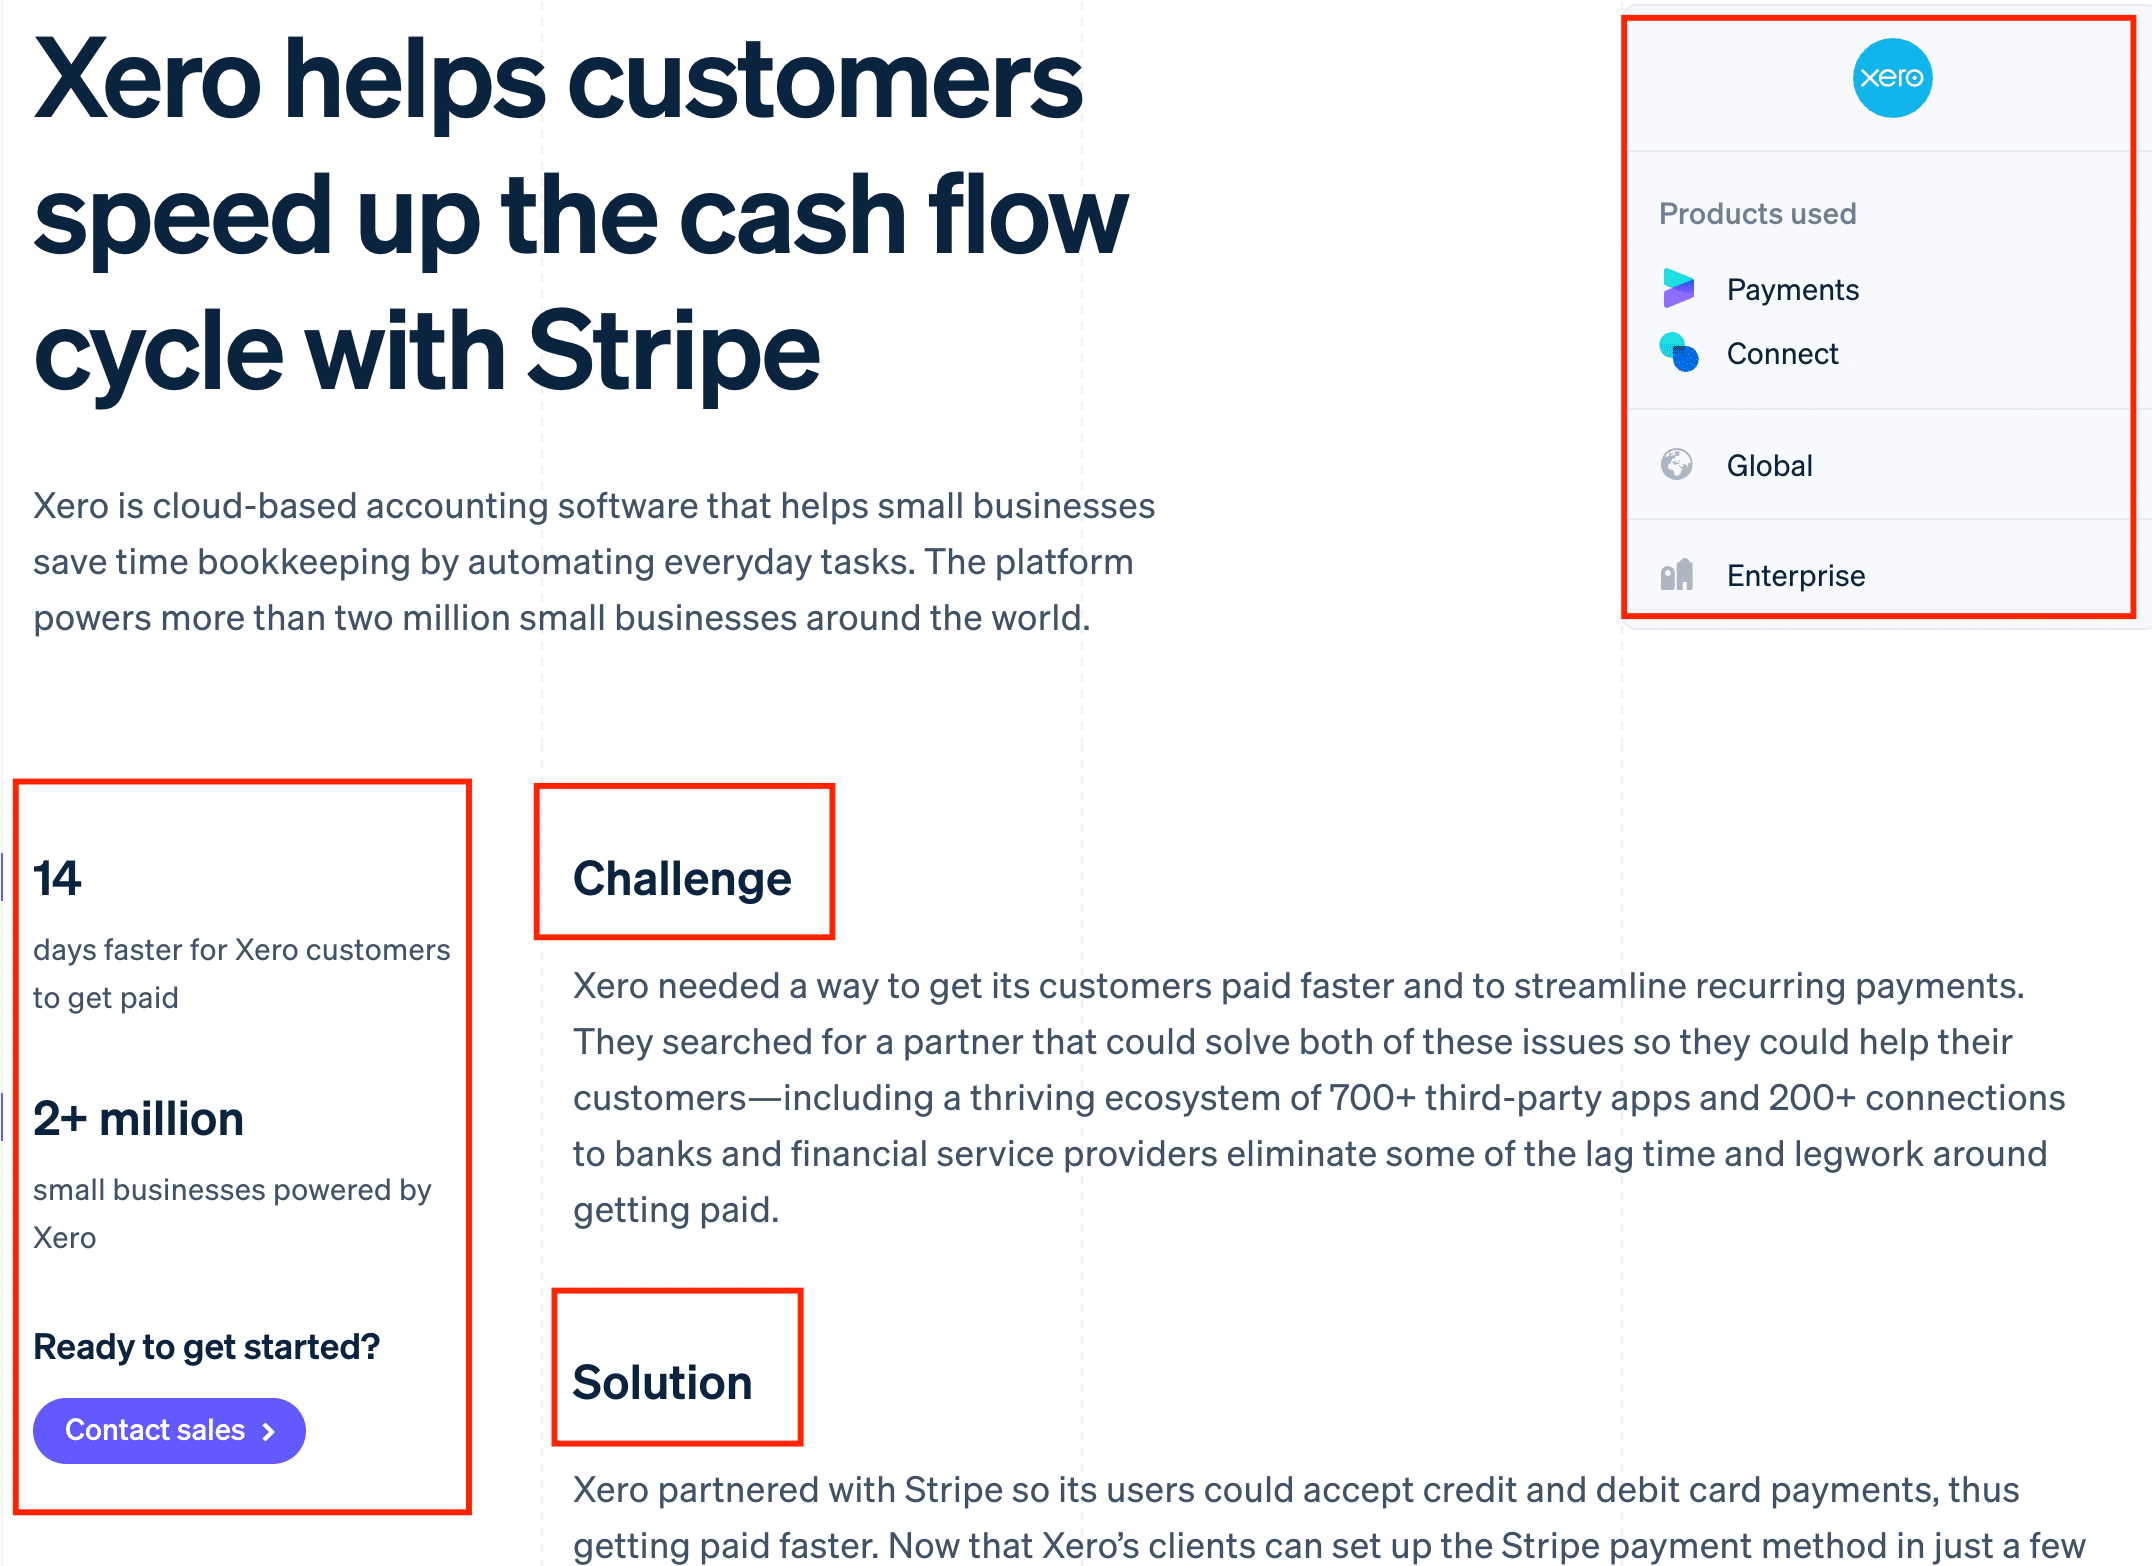 customer story example - main elements